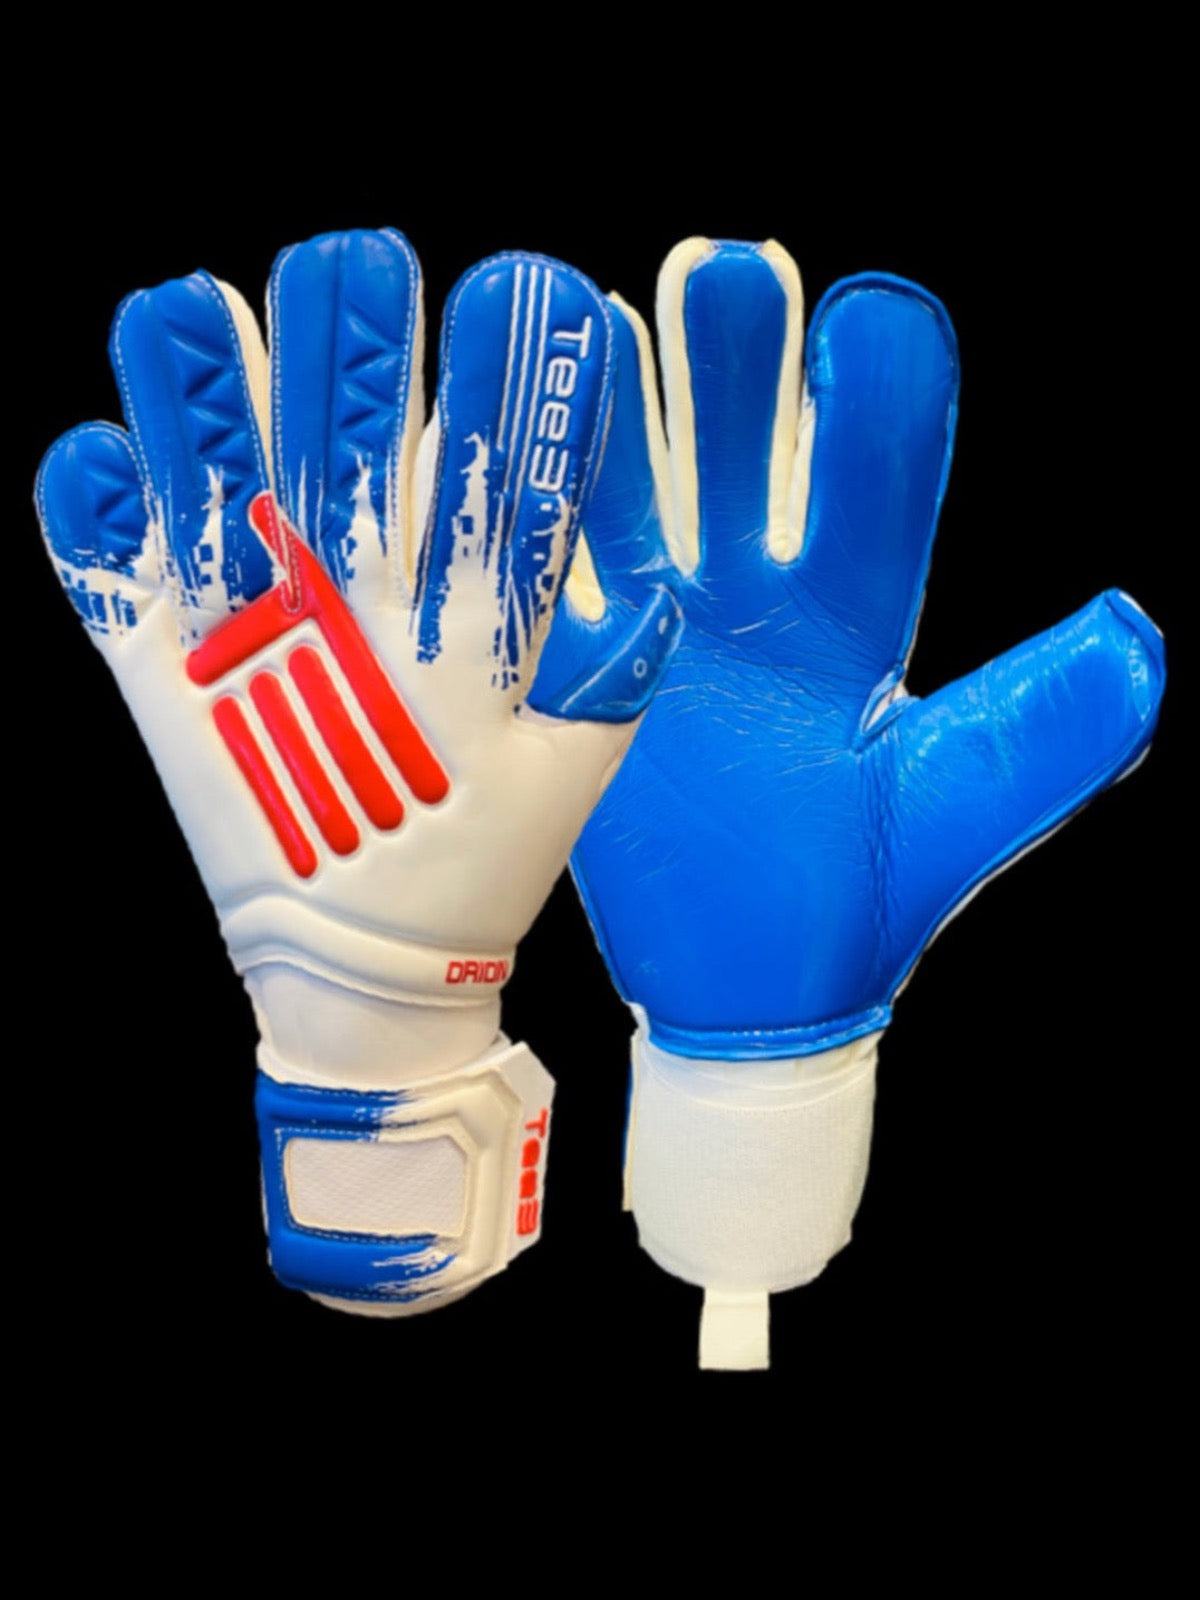 A negative cut goalkeeping glove worn by professional goalkeepers